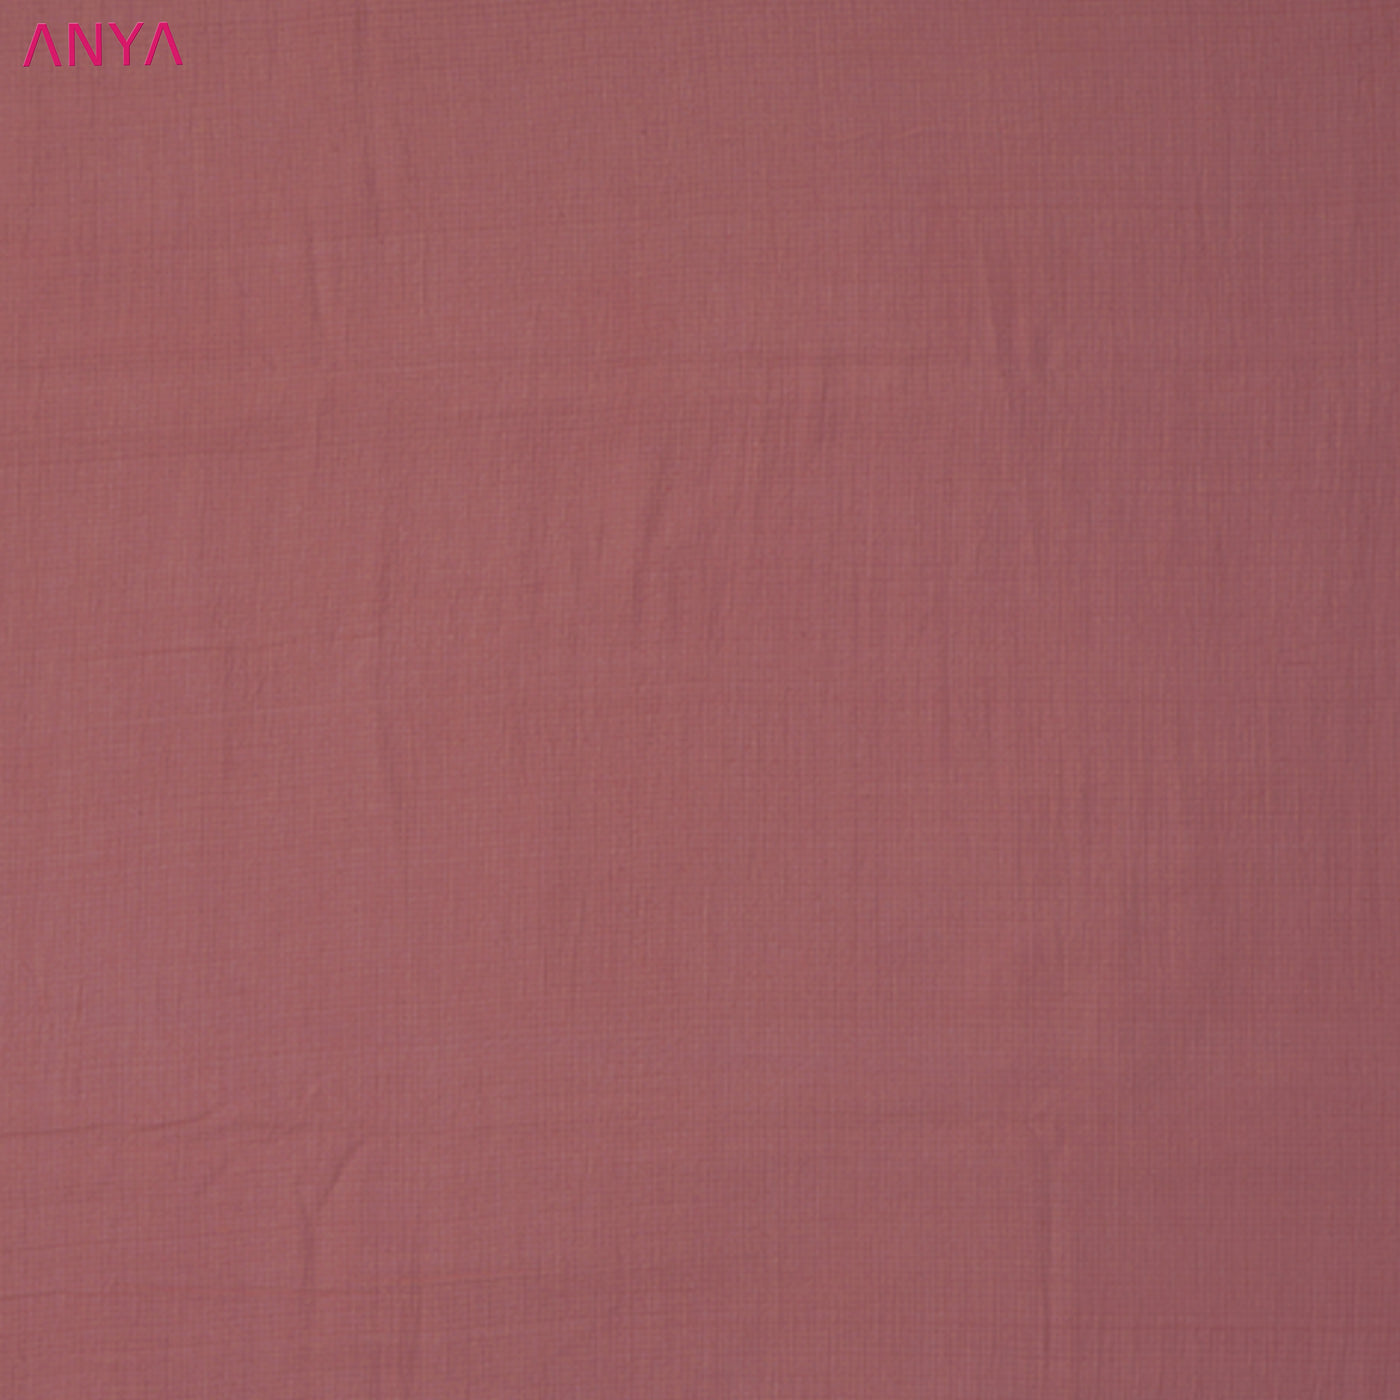 Onion Pink Cotton Fabric with Small Checks Design